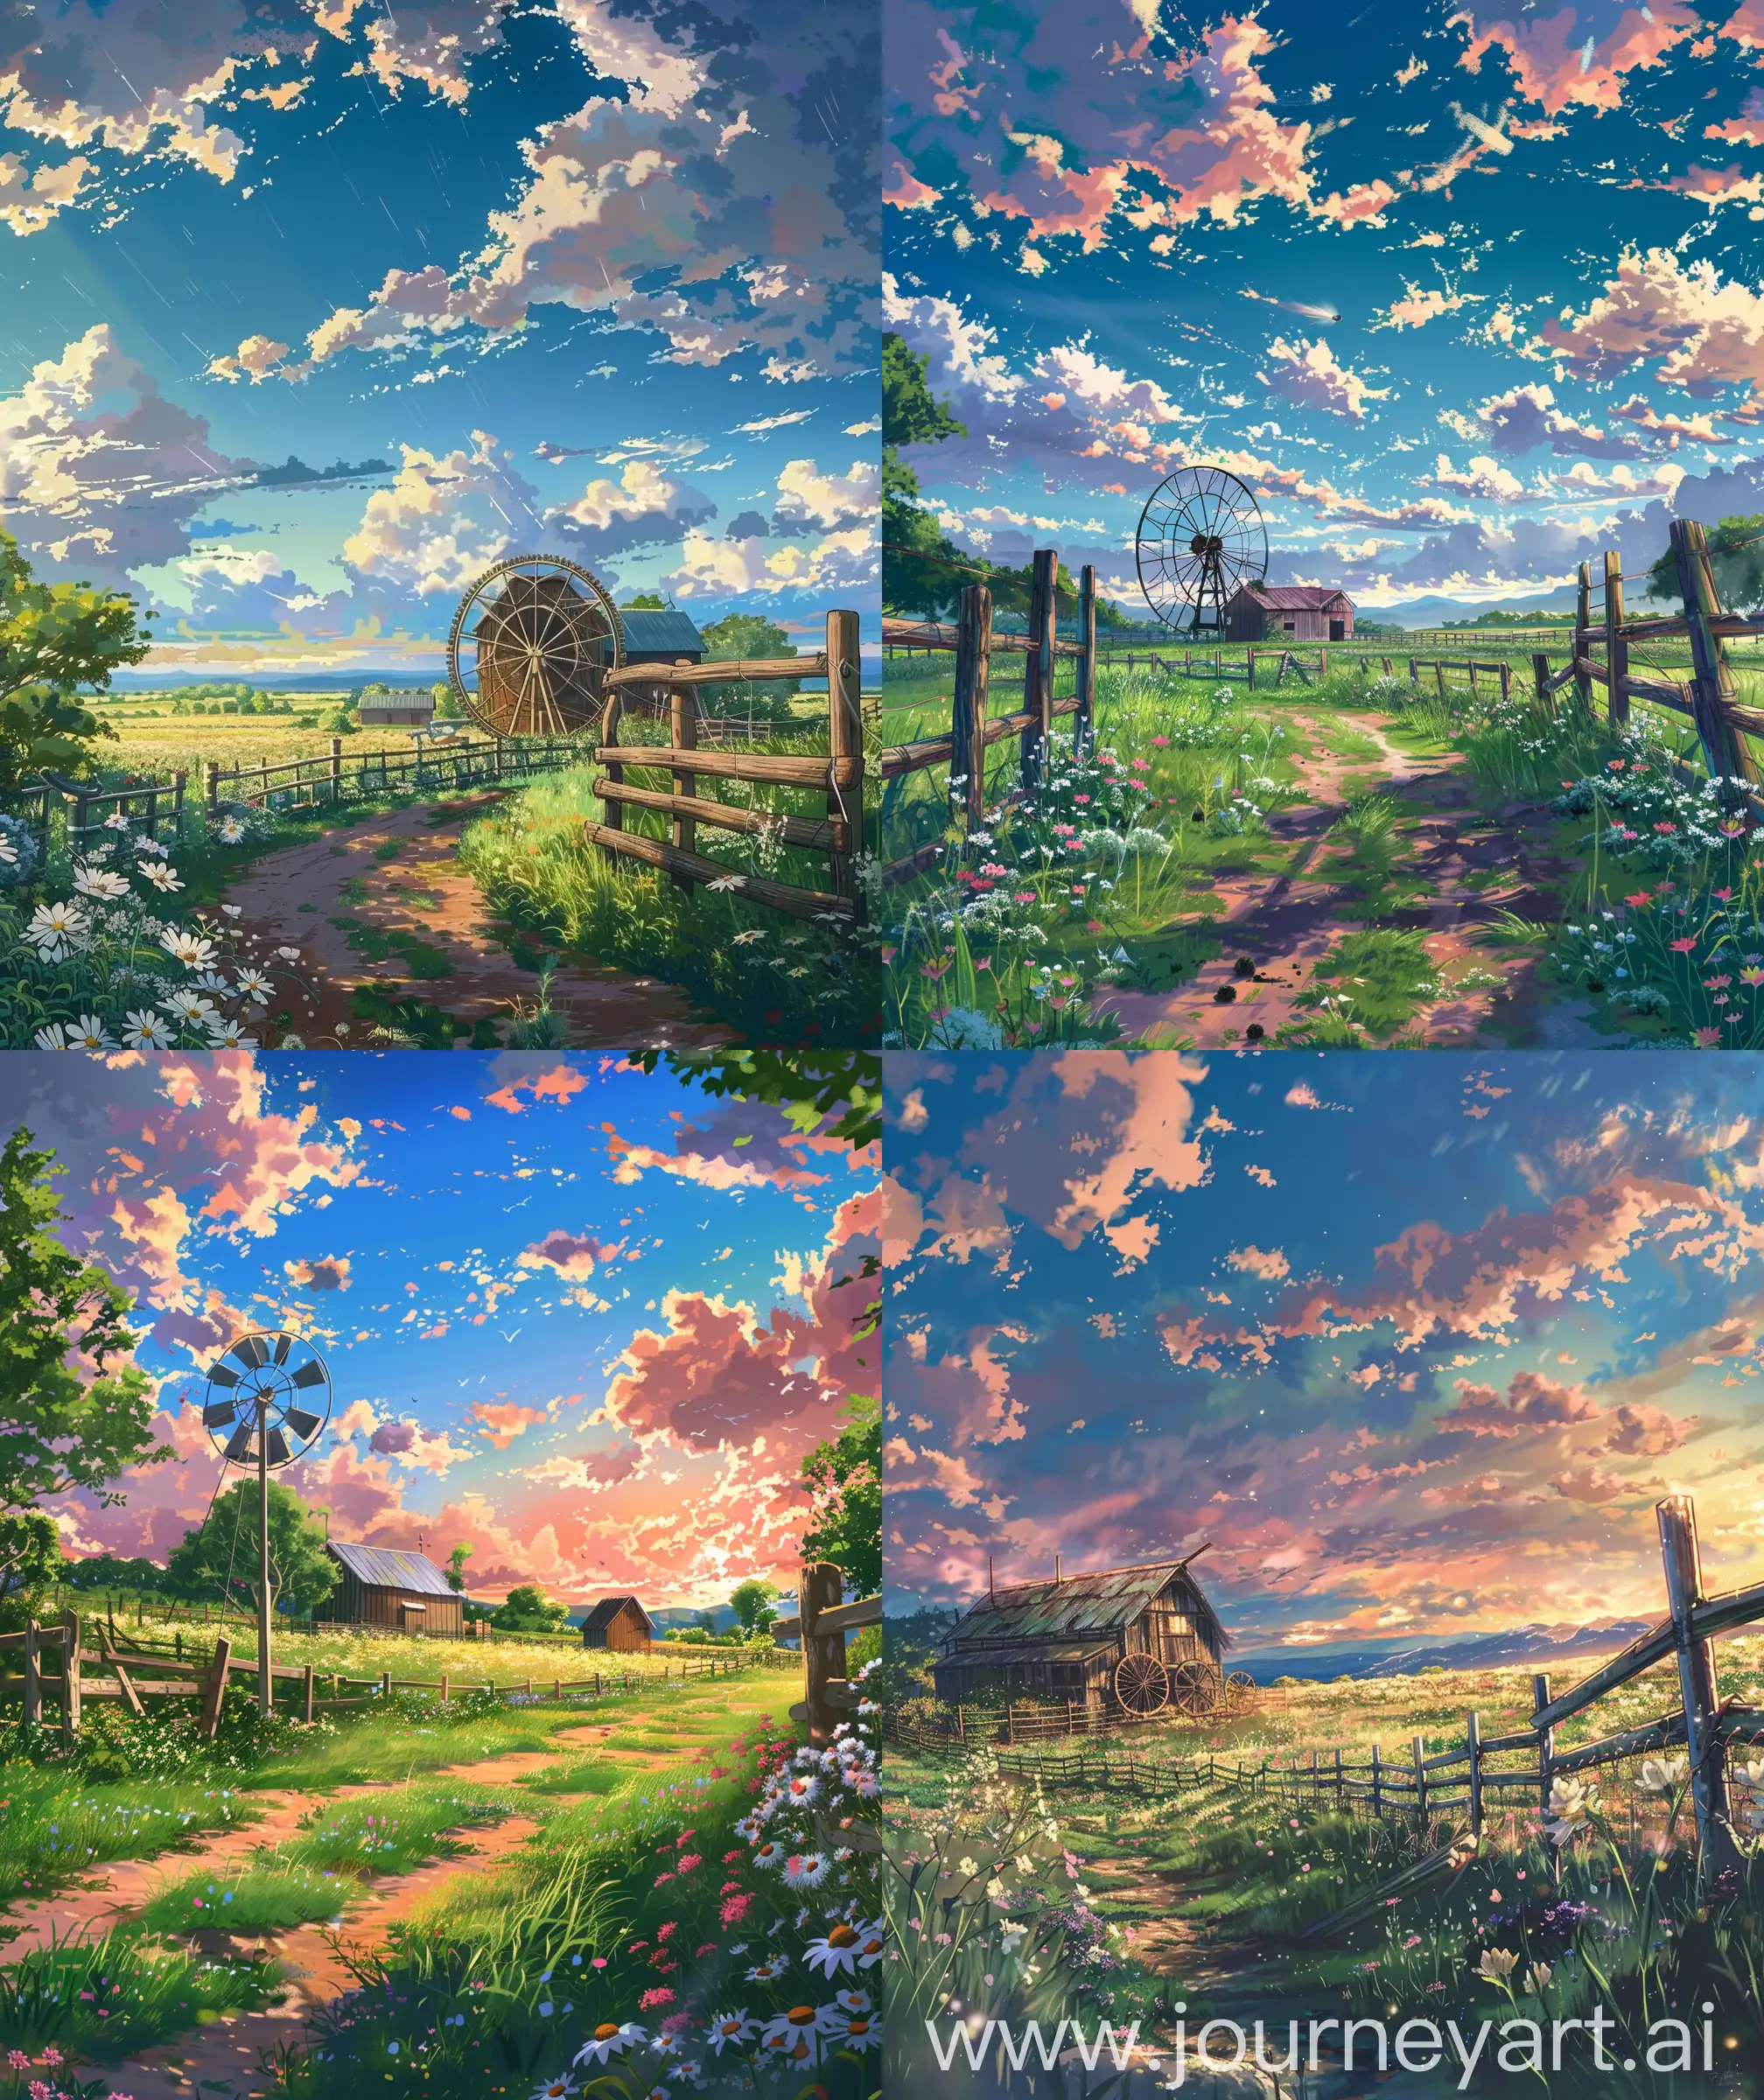 Beautiful anime scenary, illustration, mokoto shinkai and Ghibli style, direct front facade view of farm land,wind wheel, beautiful sky, fence, grass, flowers ,anime scenary, --ar 27:32 